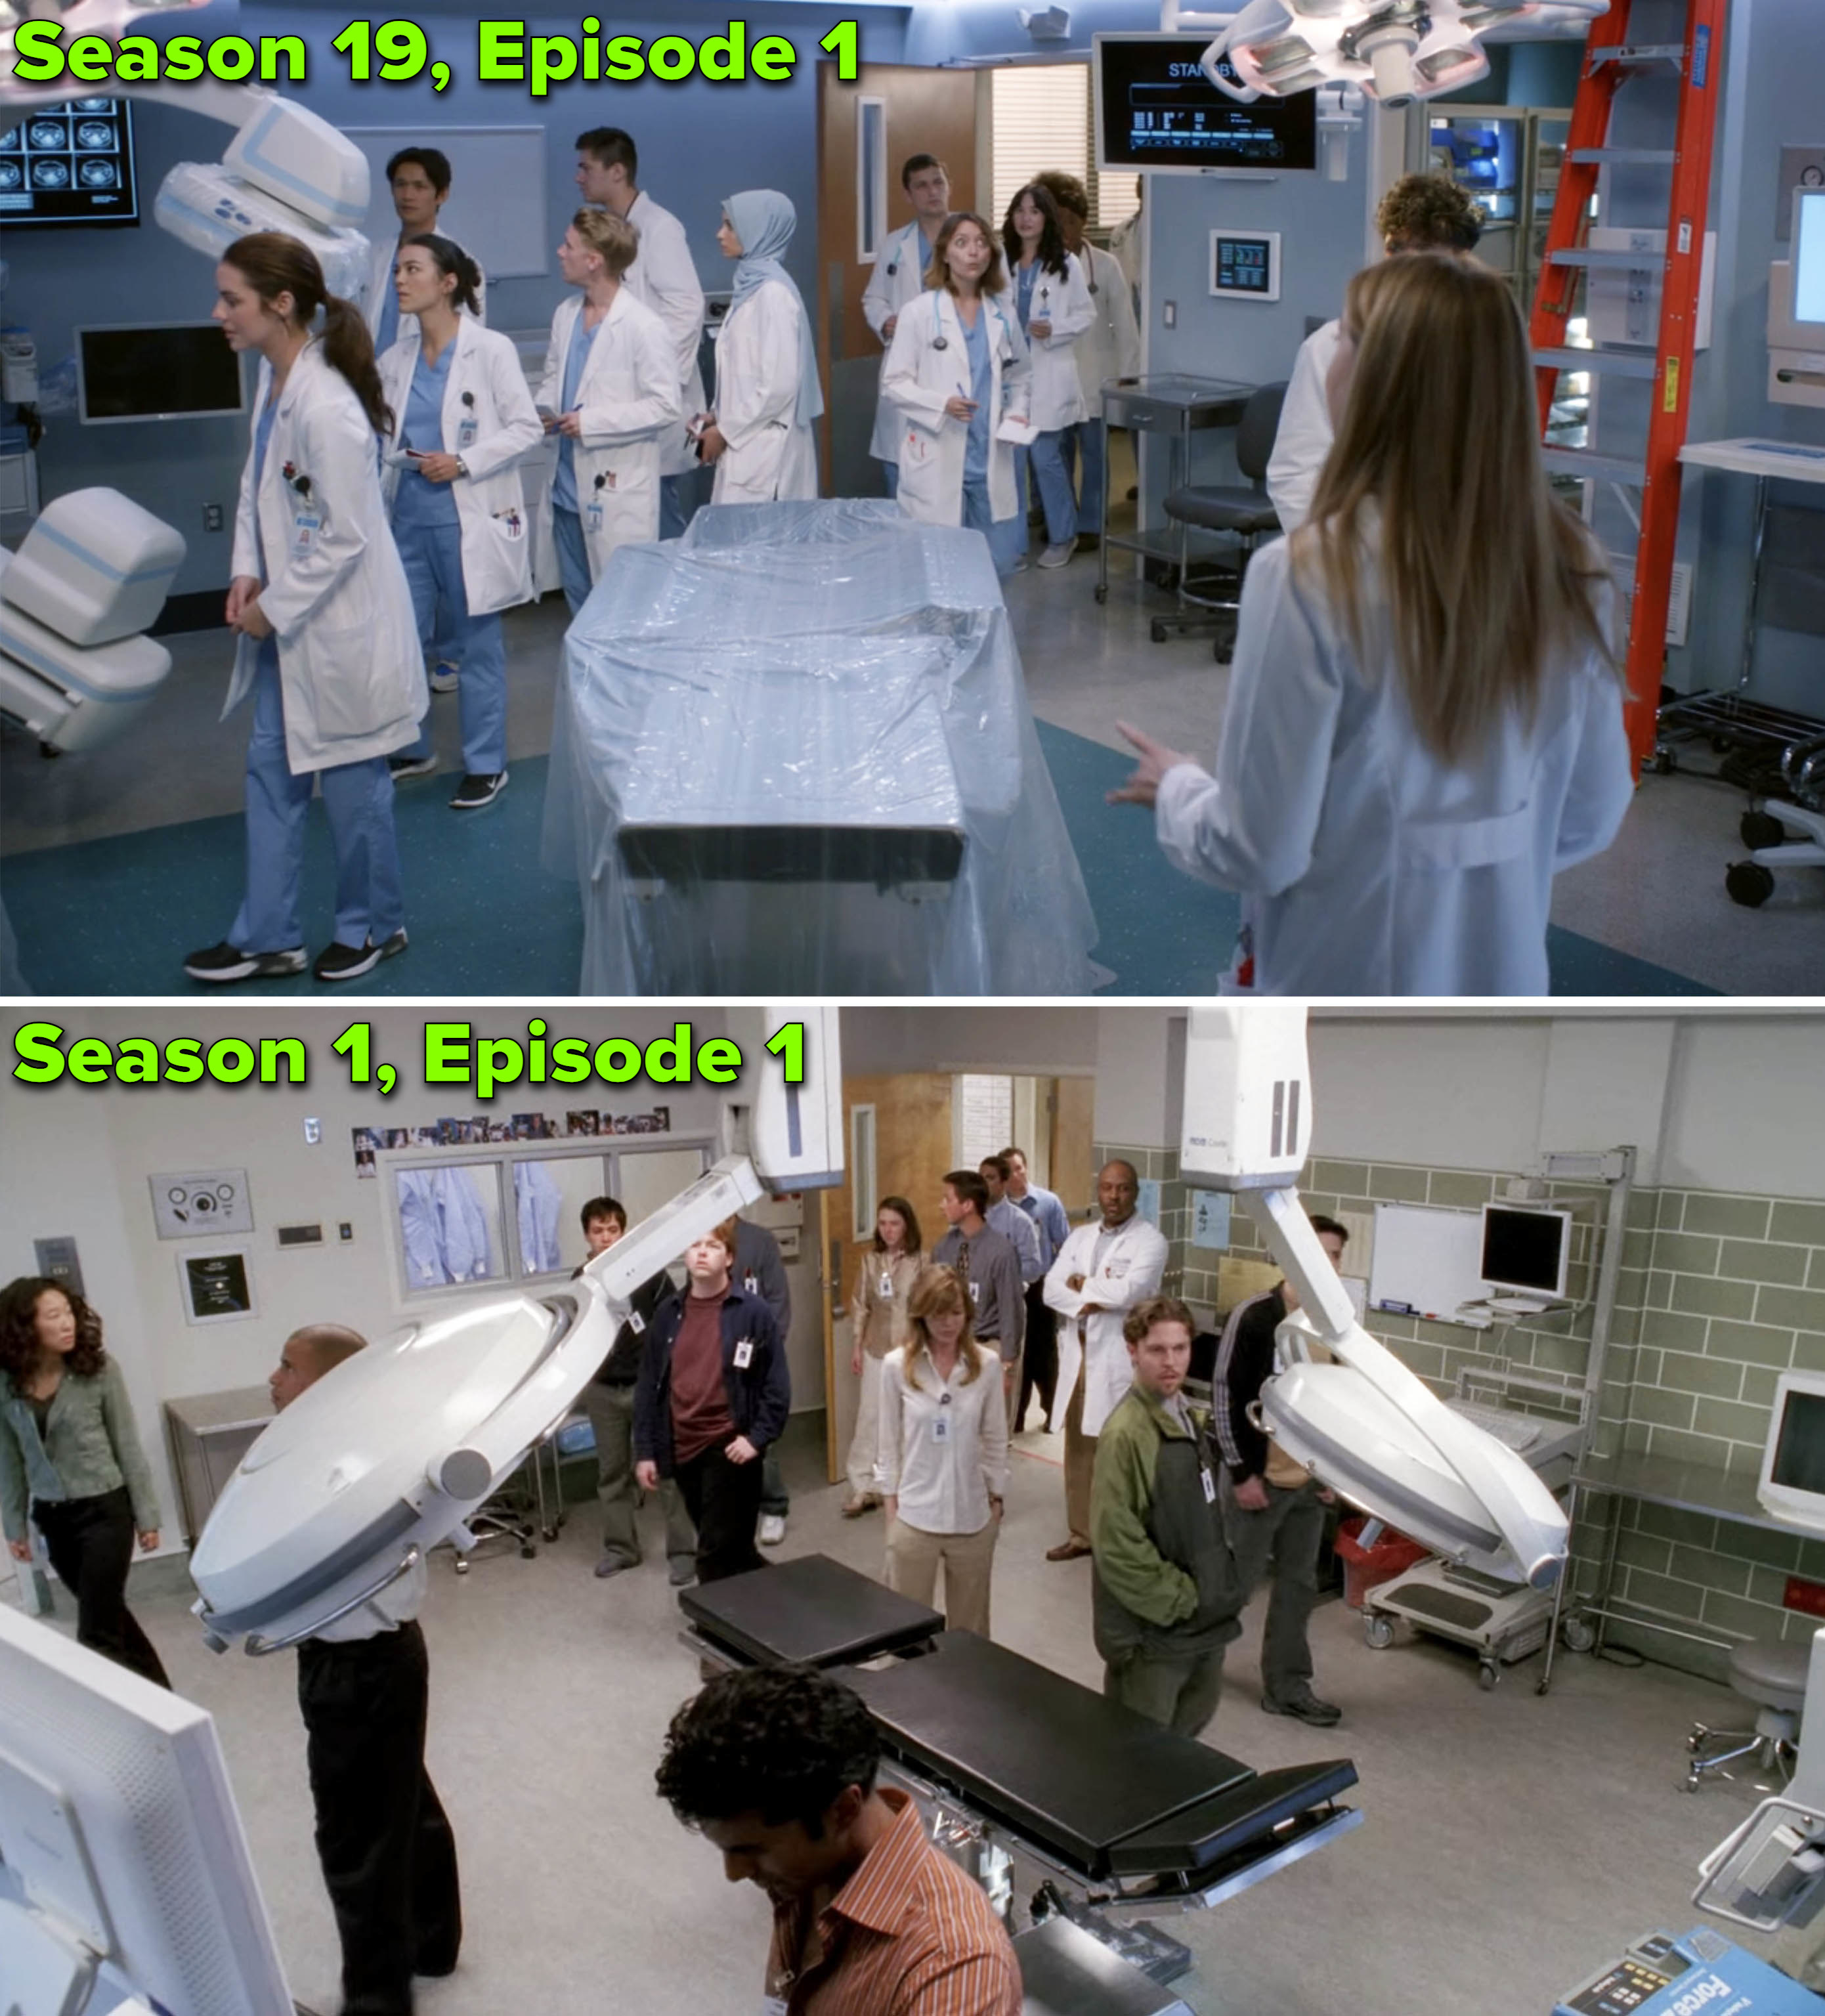 Meredith giving a speech in an OR in Season 19 vs Richard in Season 1